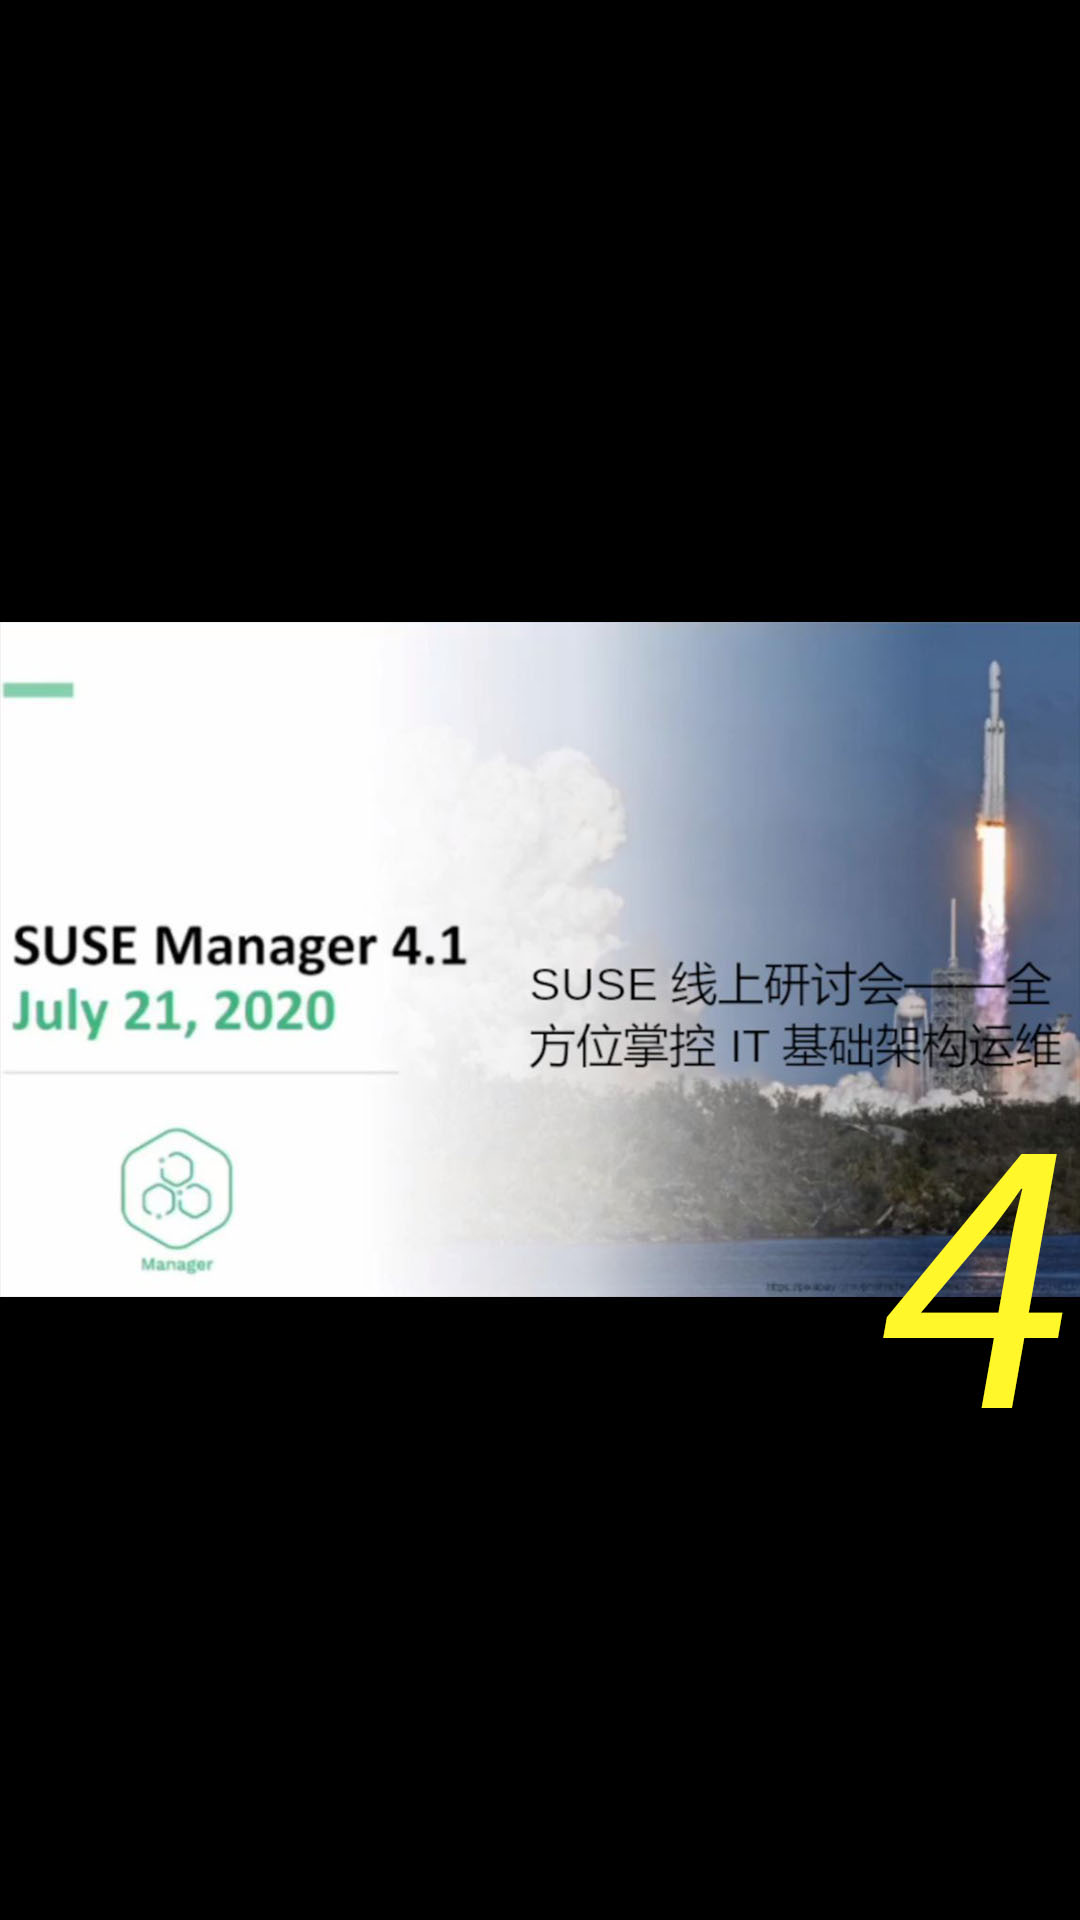 SUSE 线上研讨会——全方位掌控IT基础架构运维（在线学习分享）4